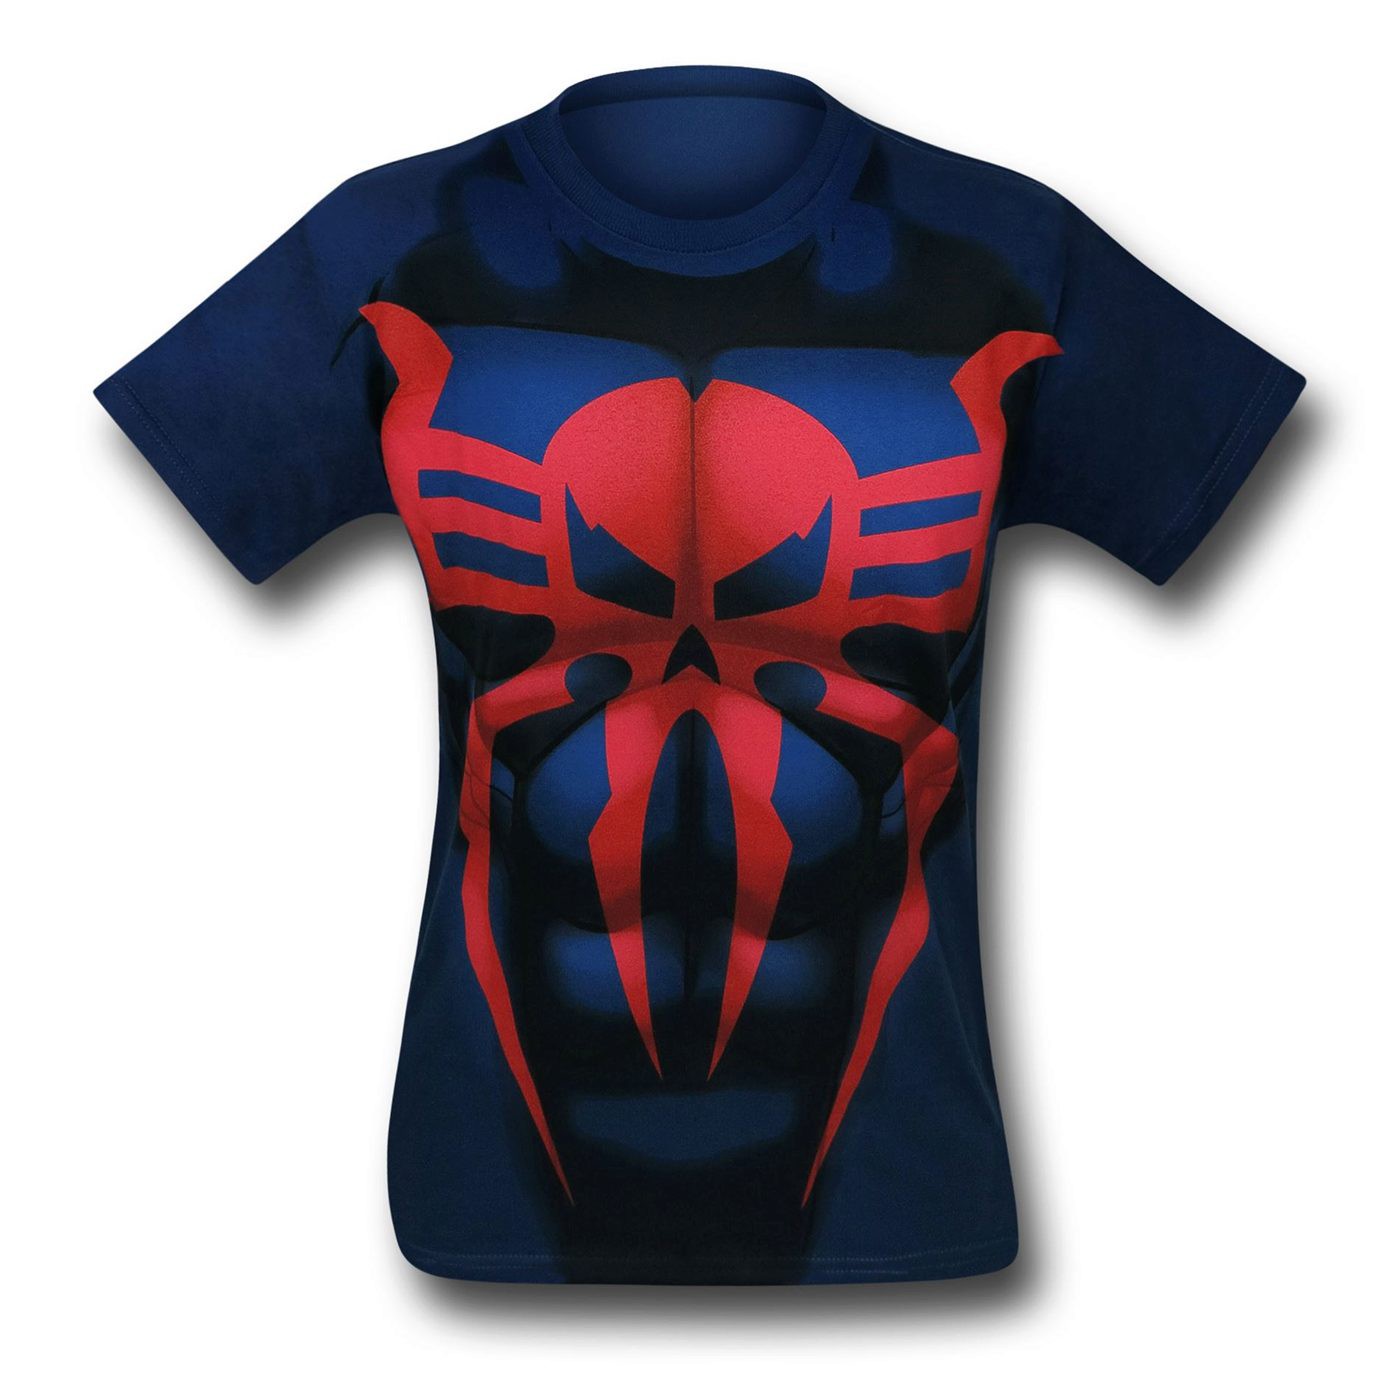 Spiderman 2099 30 Single Costume T-Shirt